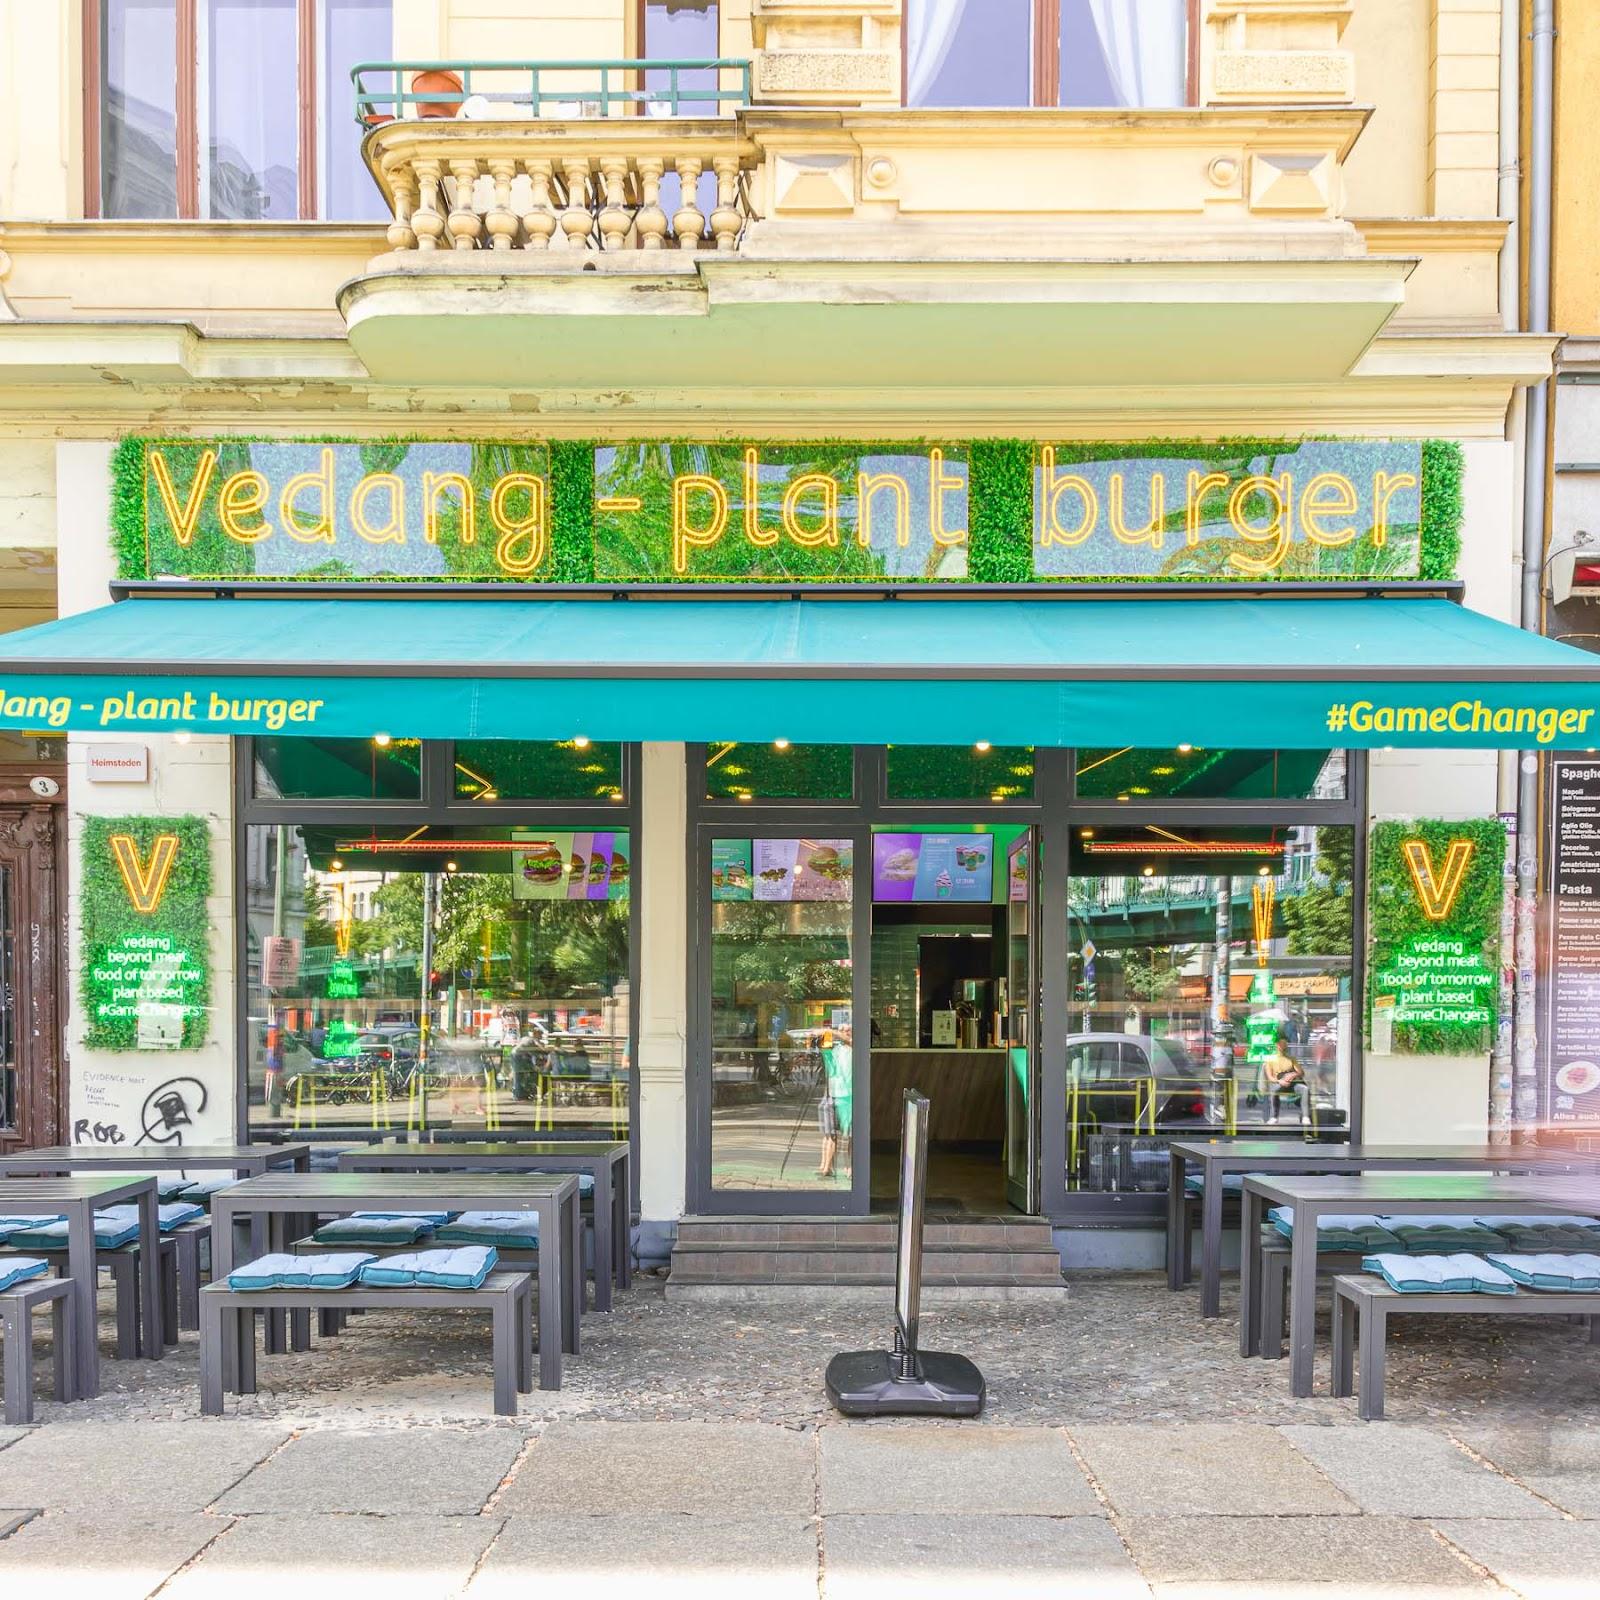 Restaurant "Vedang - plant burger (P-Berg)" in Berlin